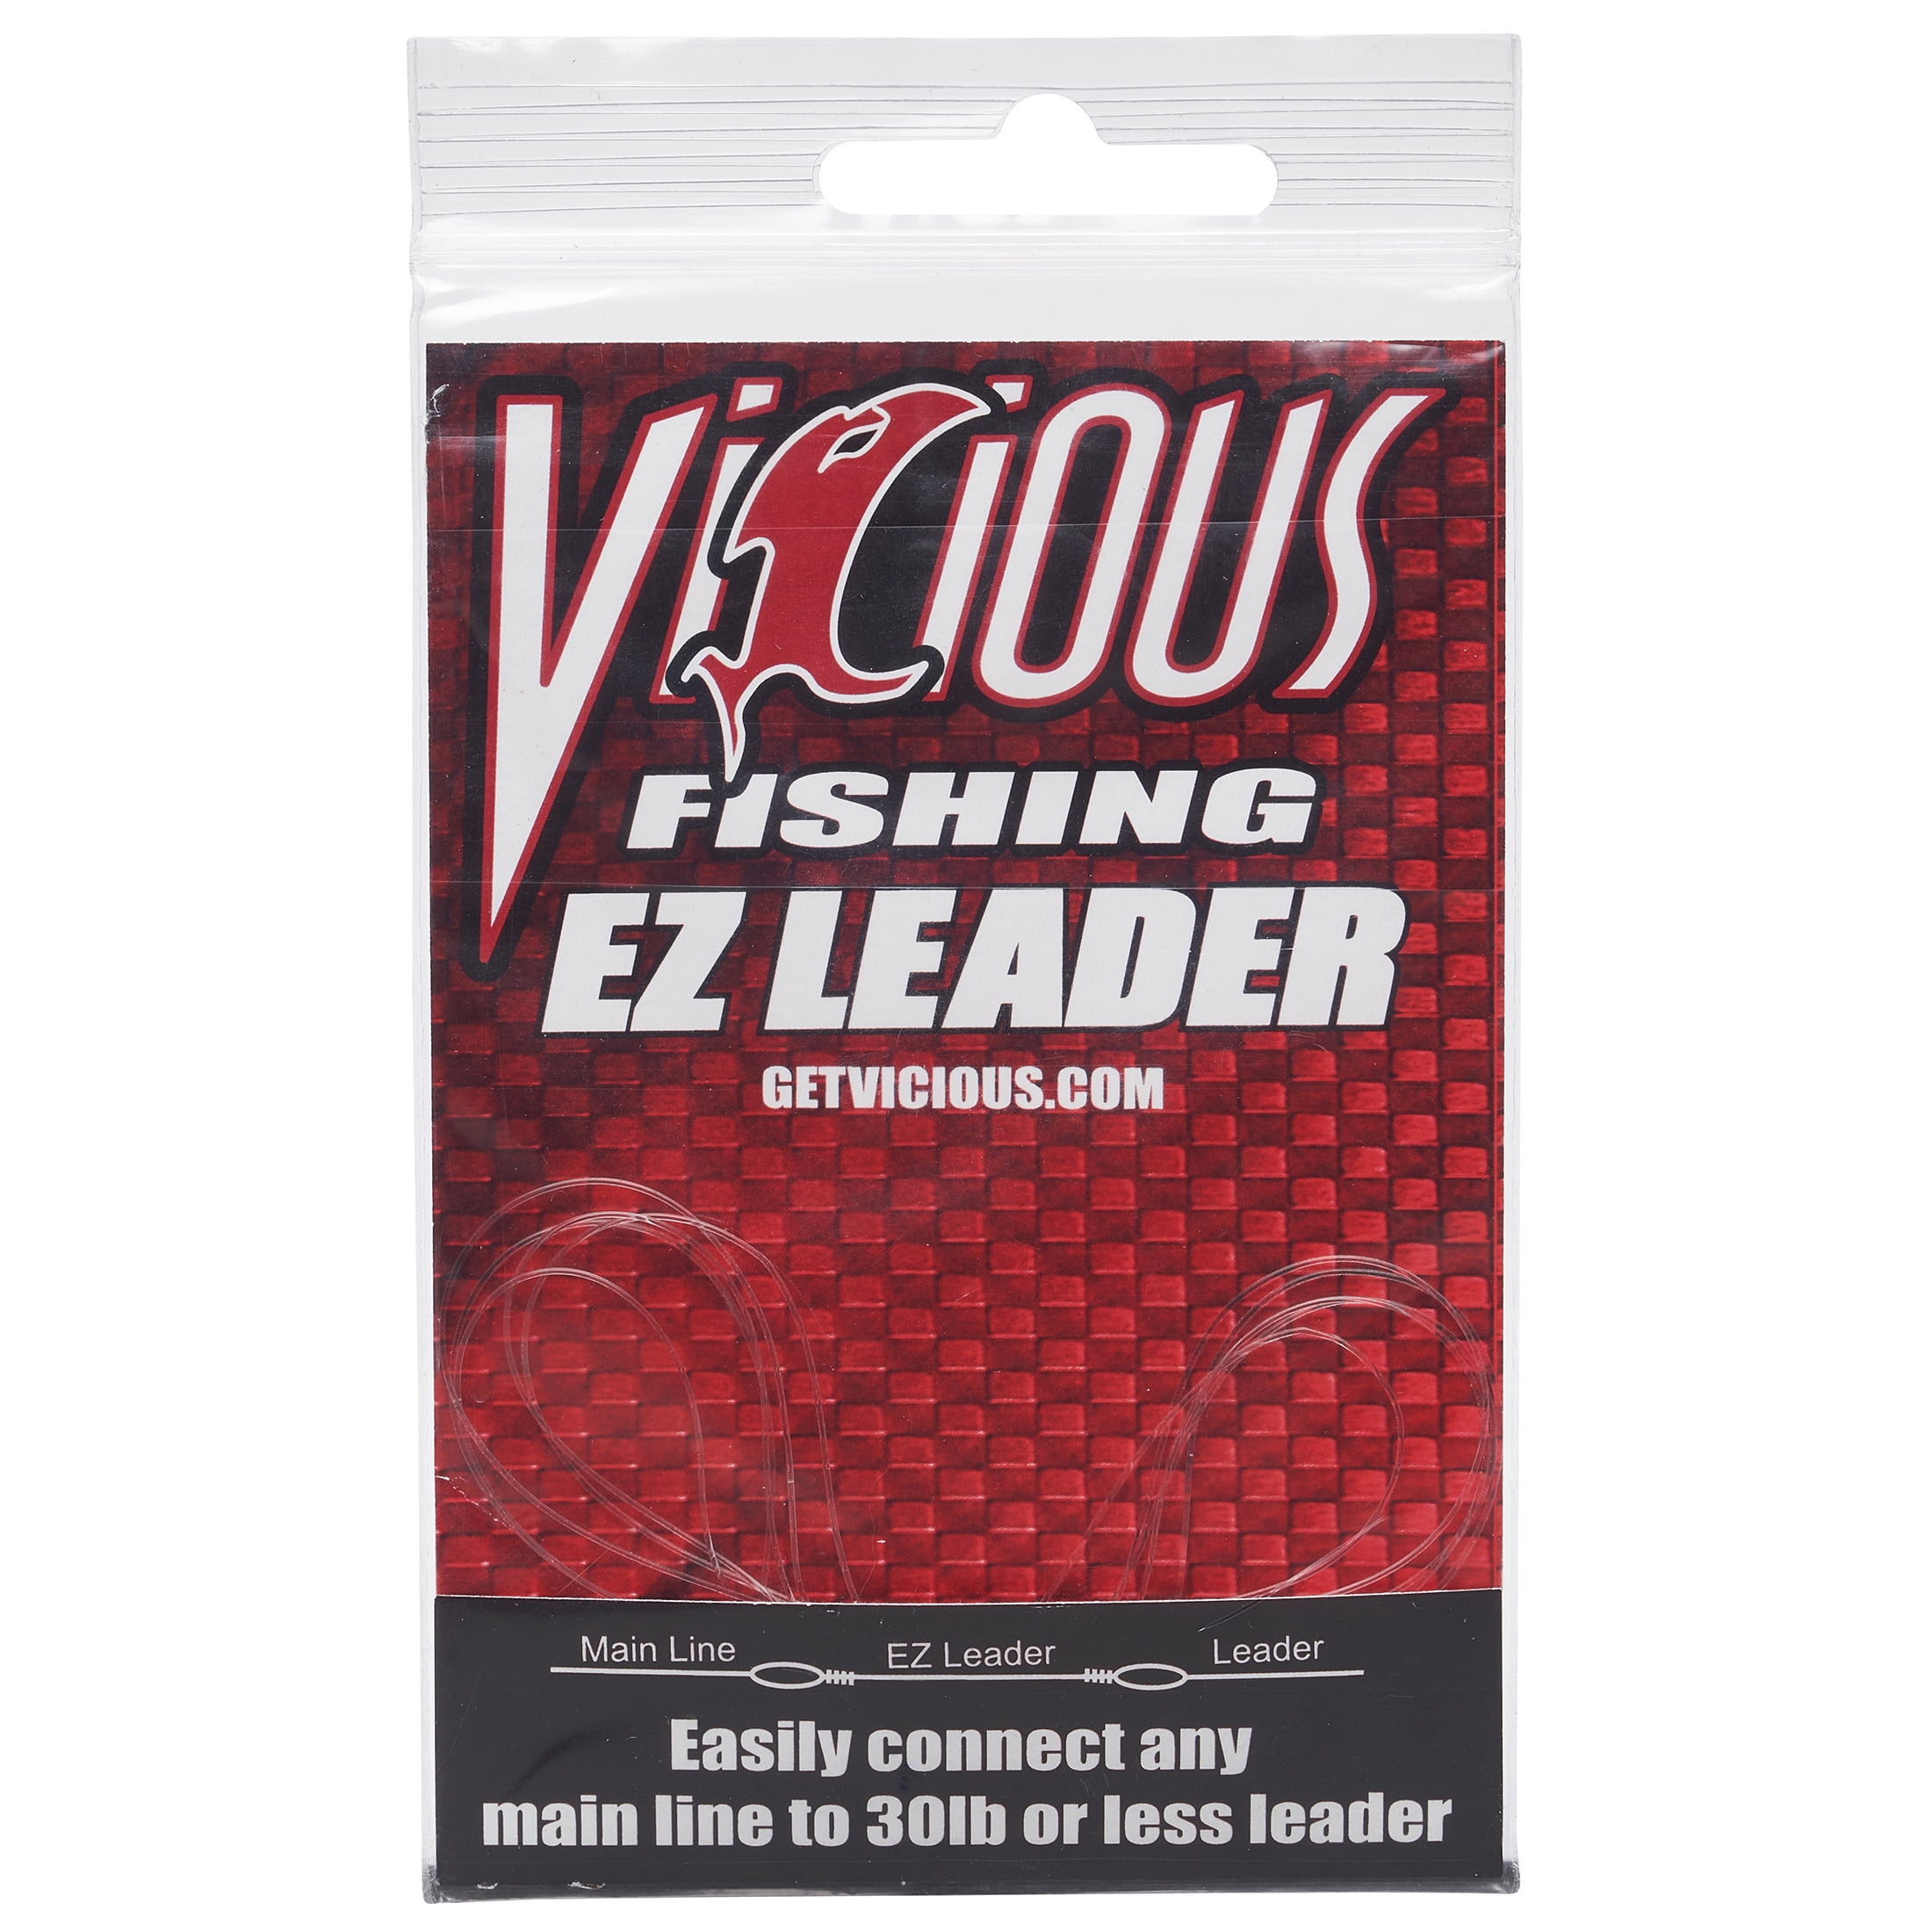 Vicious Fishing EZ Leader Fishing Leader Kit, 5 EZ Leader Connectors, Size: One Size